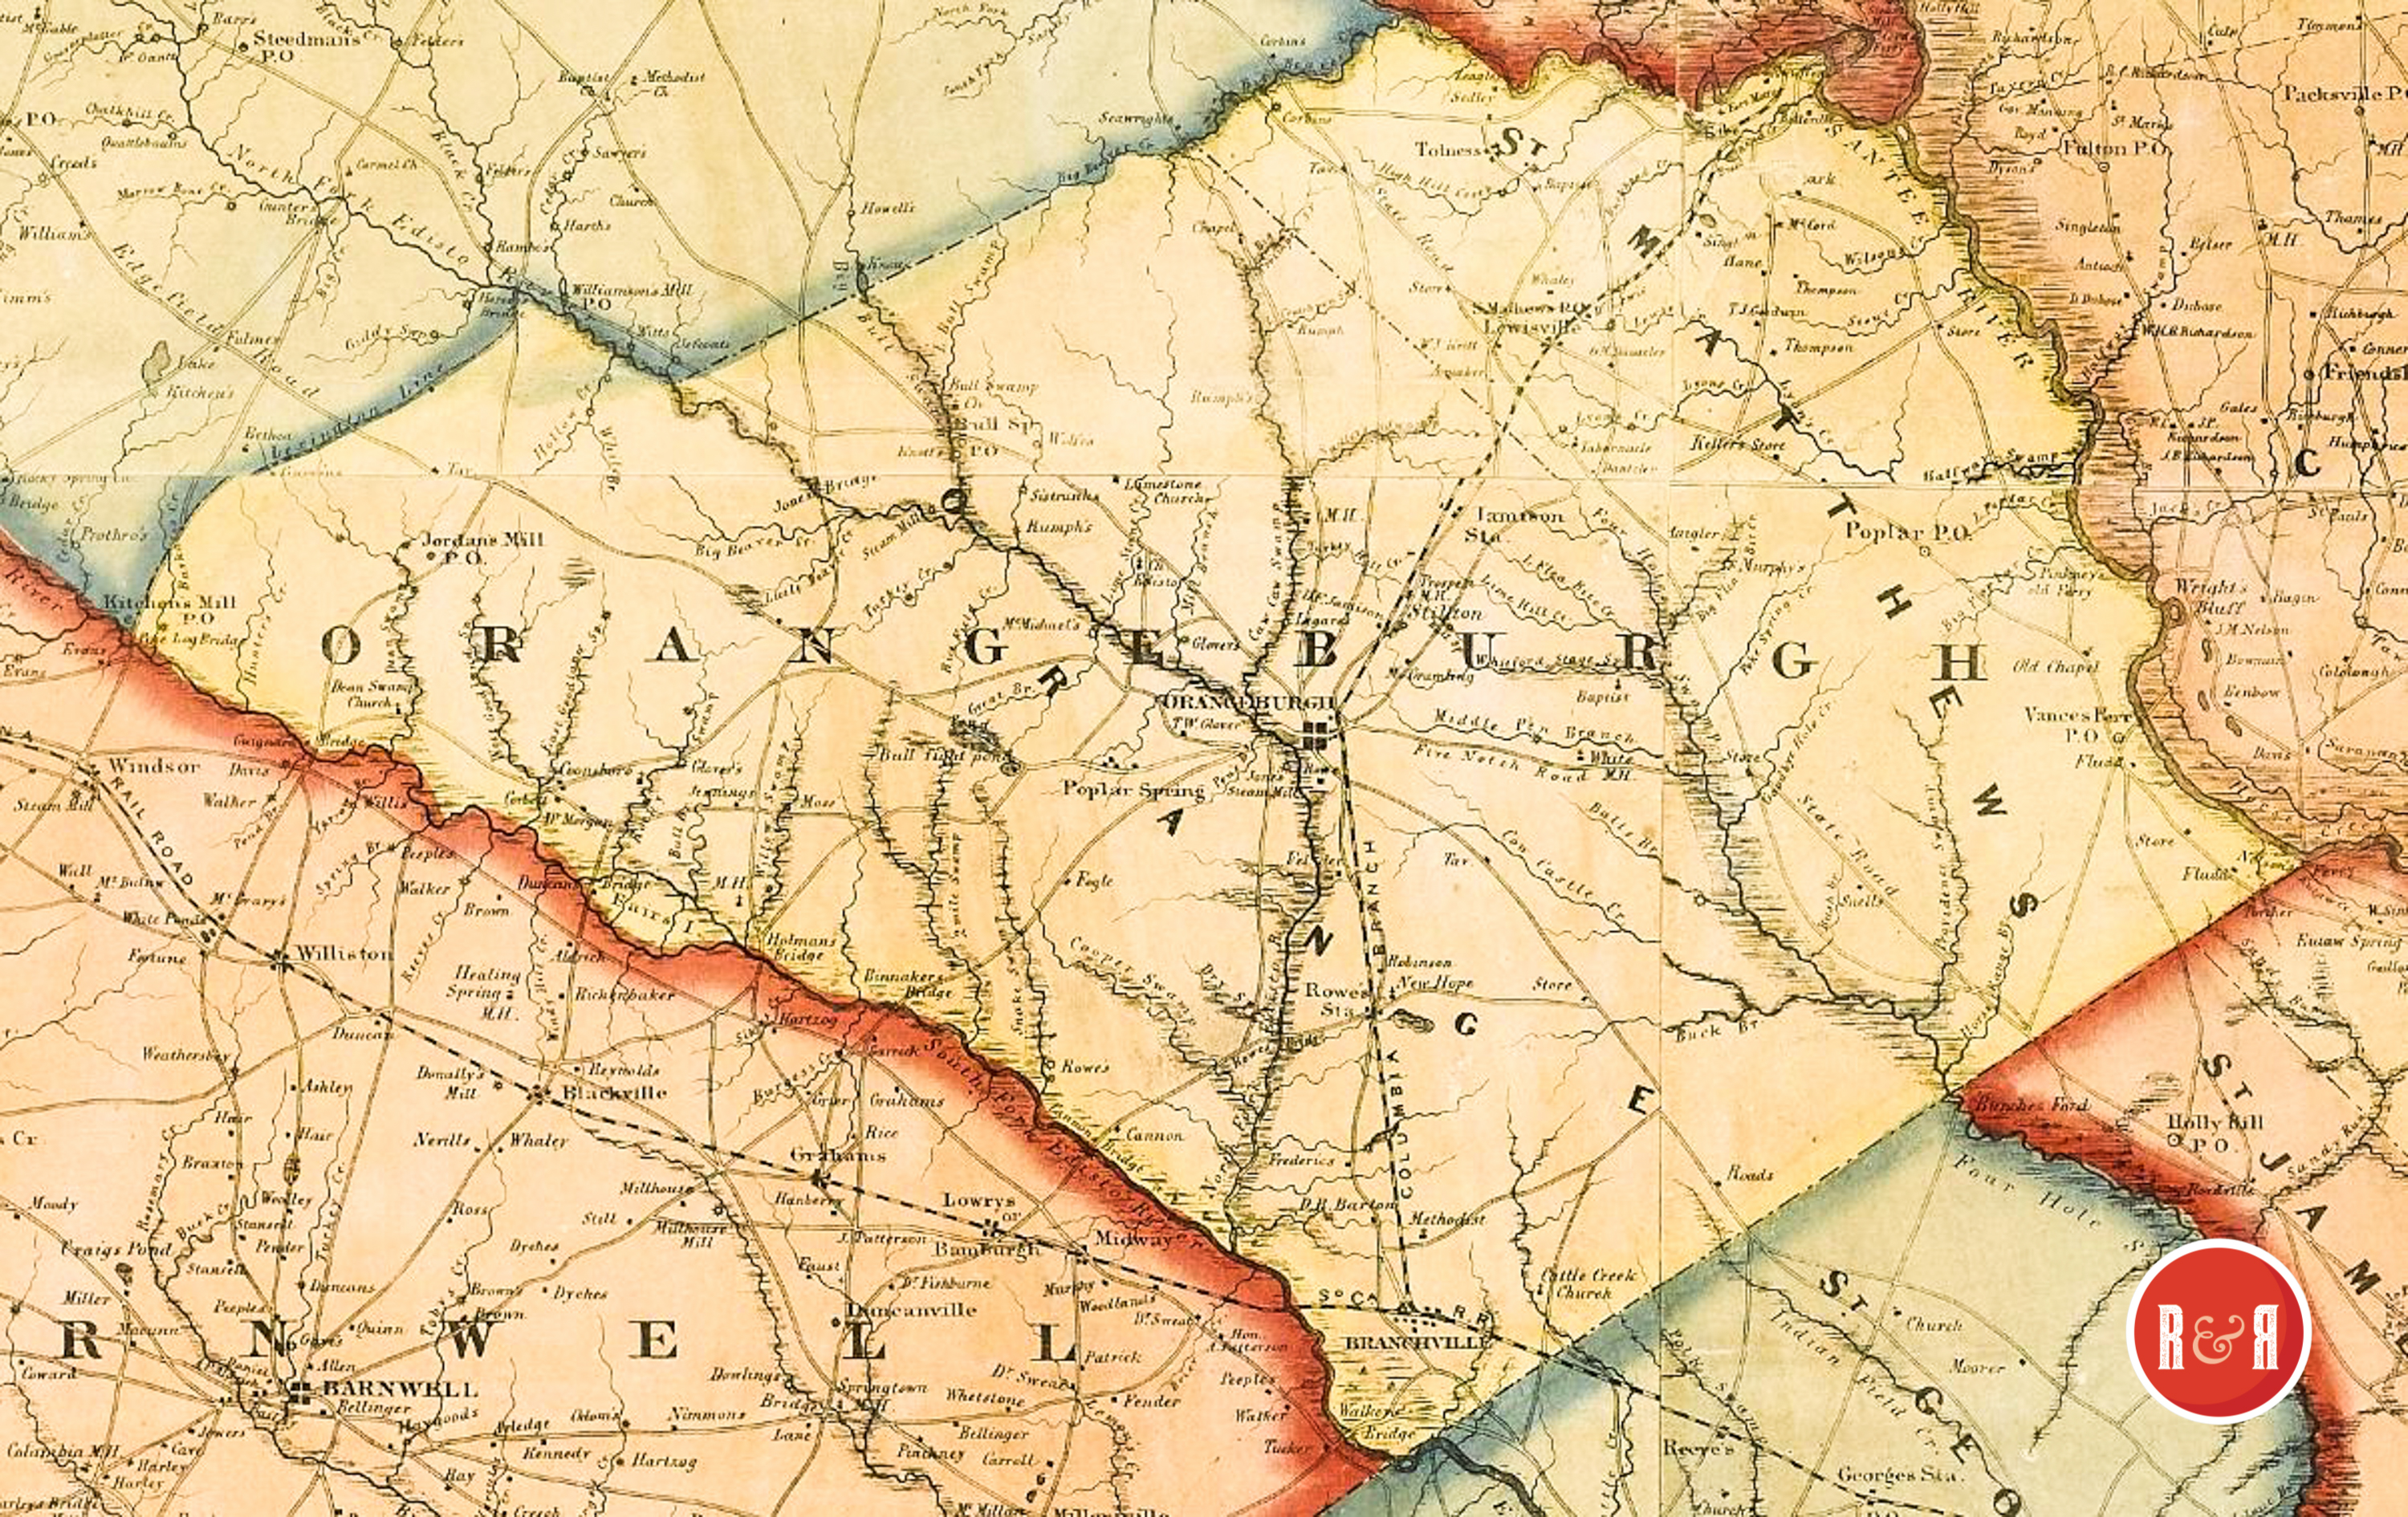 COLTON'S 1854 MAP OF ORANGEBURG COUNTY - ENLARGEMENT